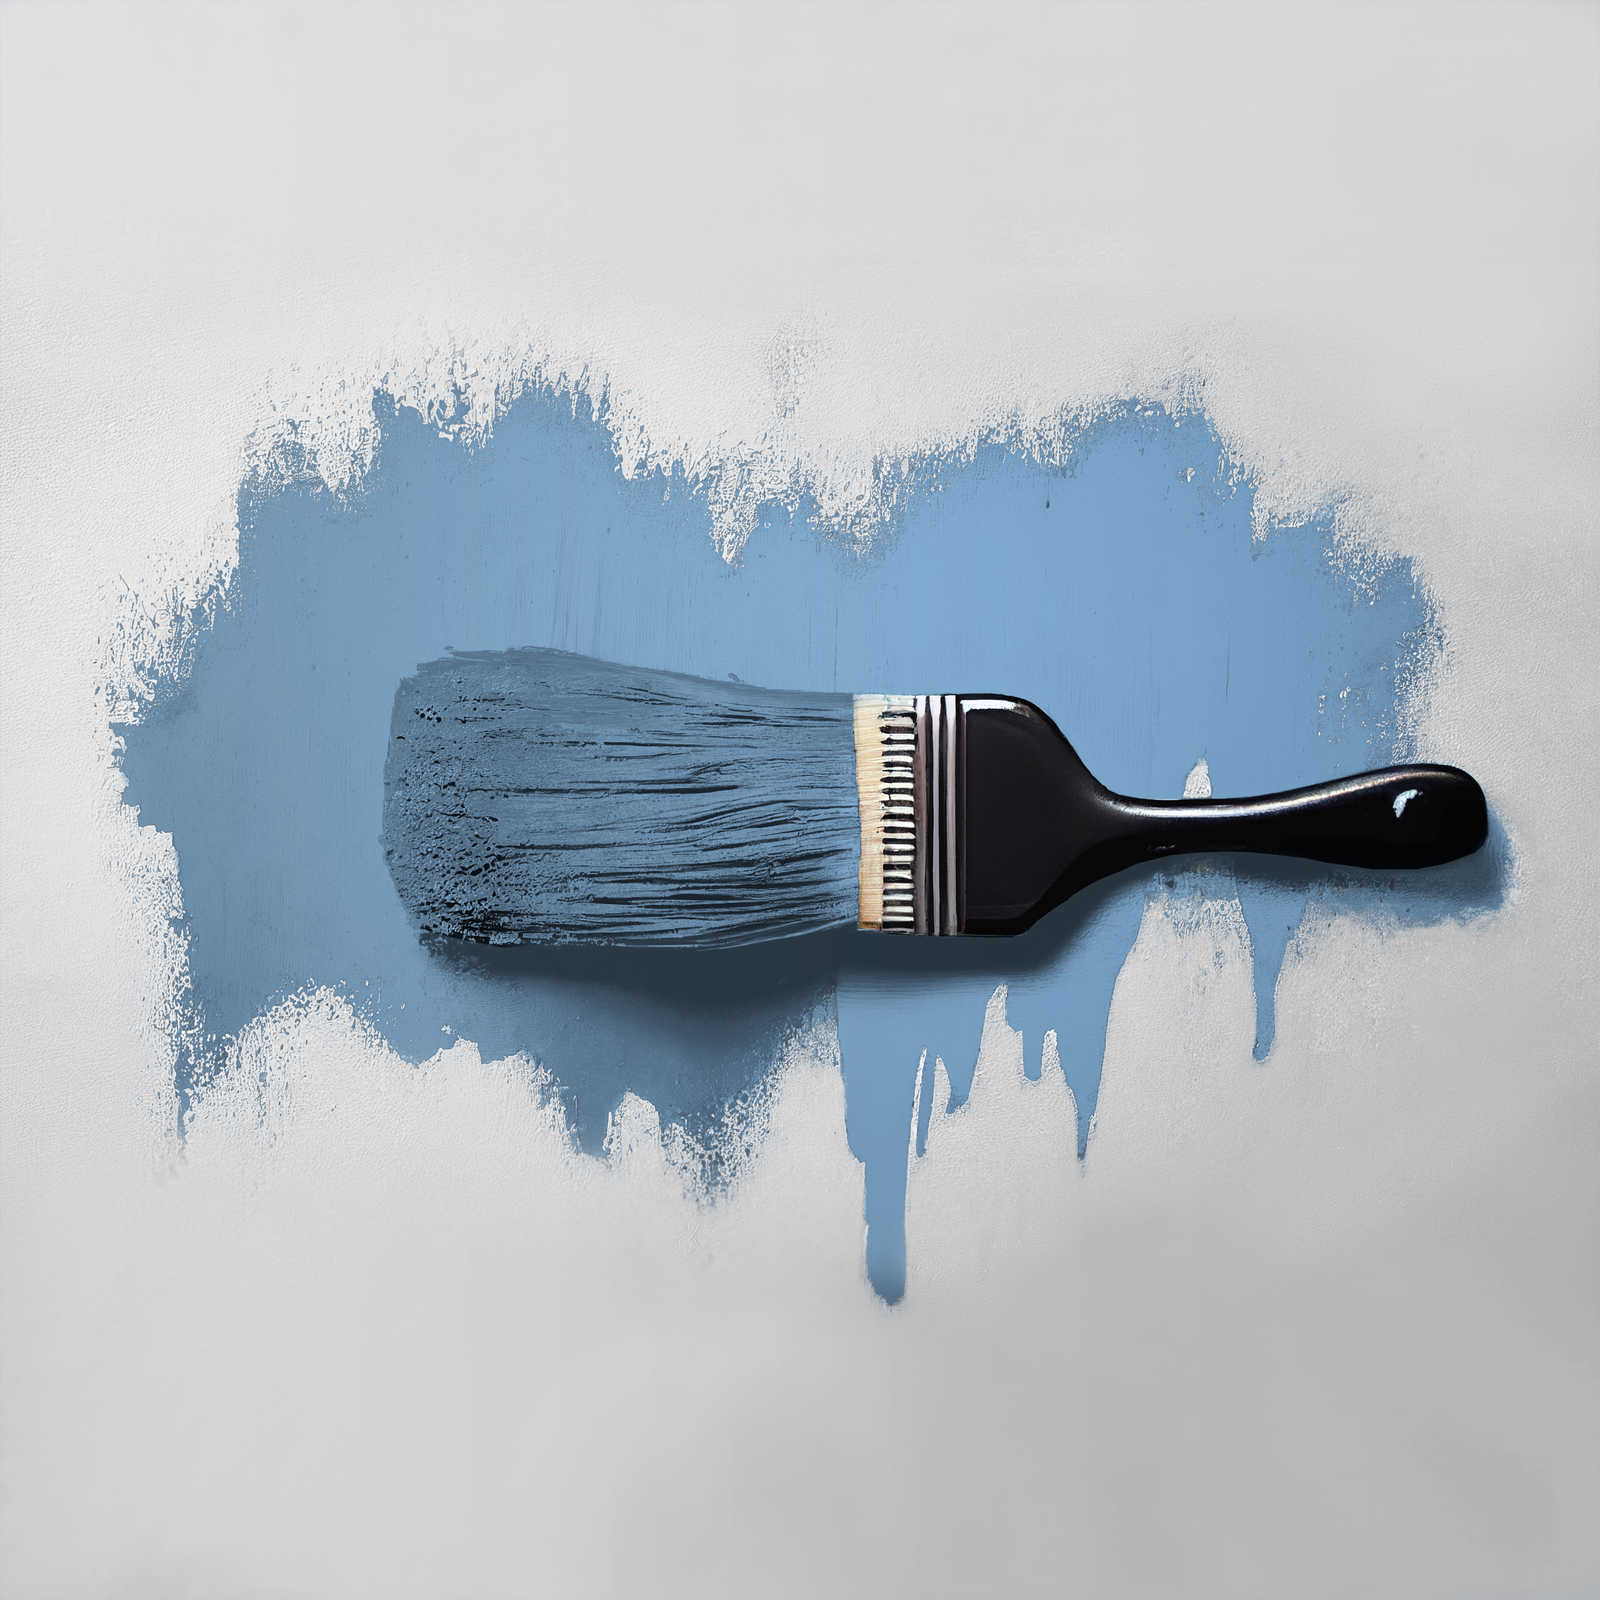             Wandfarbe in strahlendem Taubenblau »Blue Herring« TCK3004 – 5 Liter
        